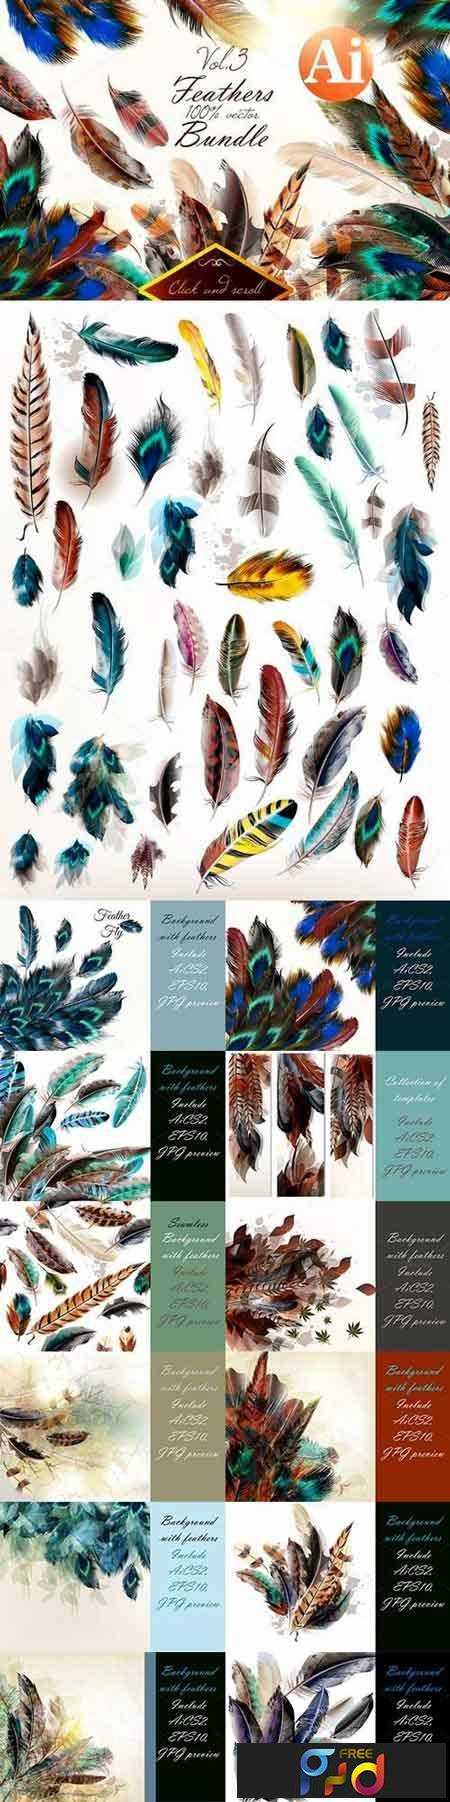 freepsdvn-com_vector_1701043_colorful_feathers_bundle